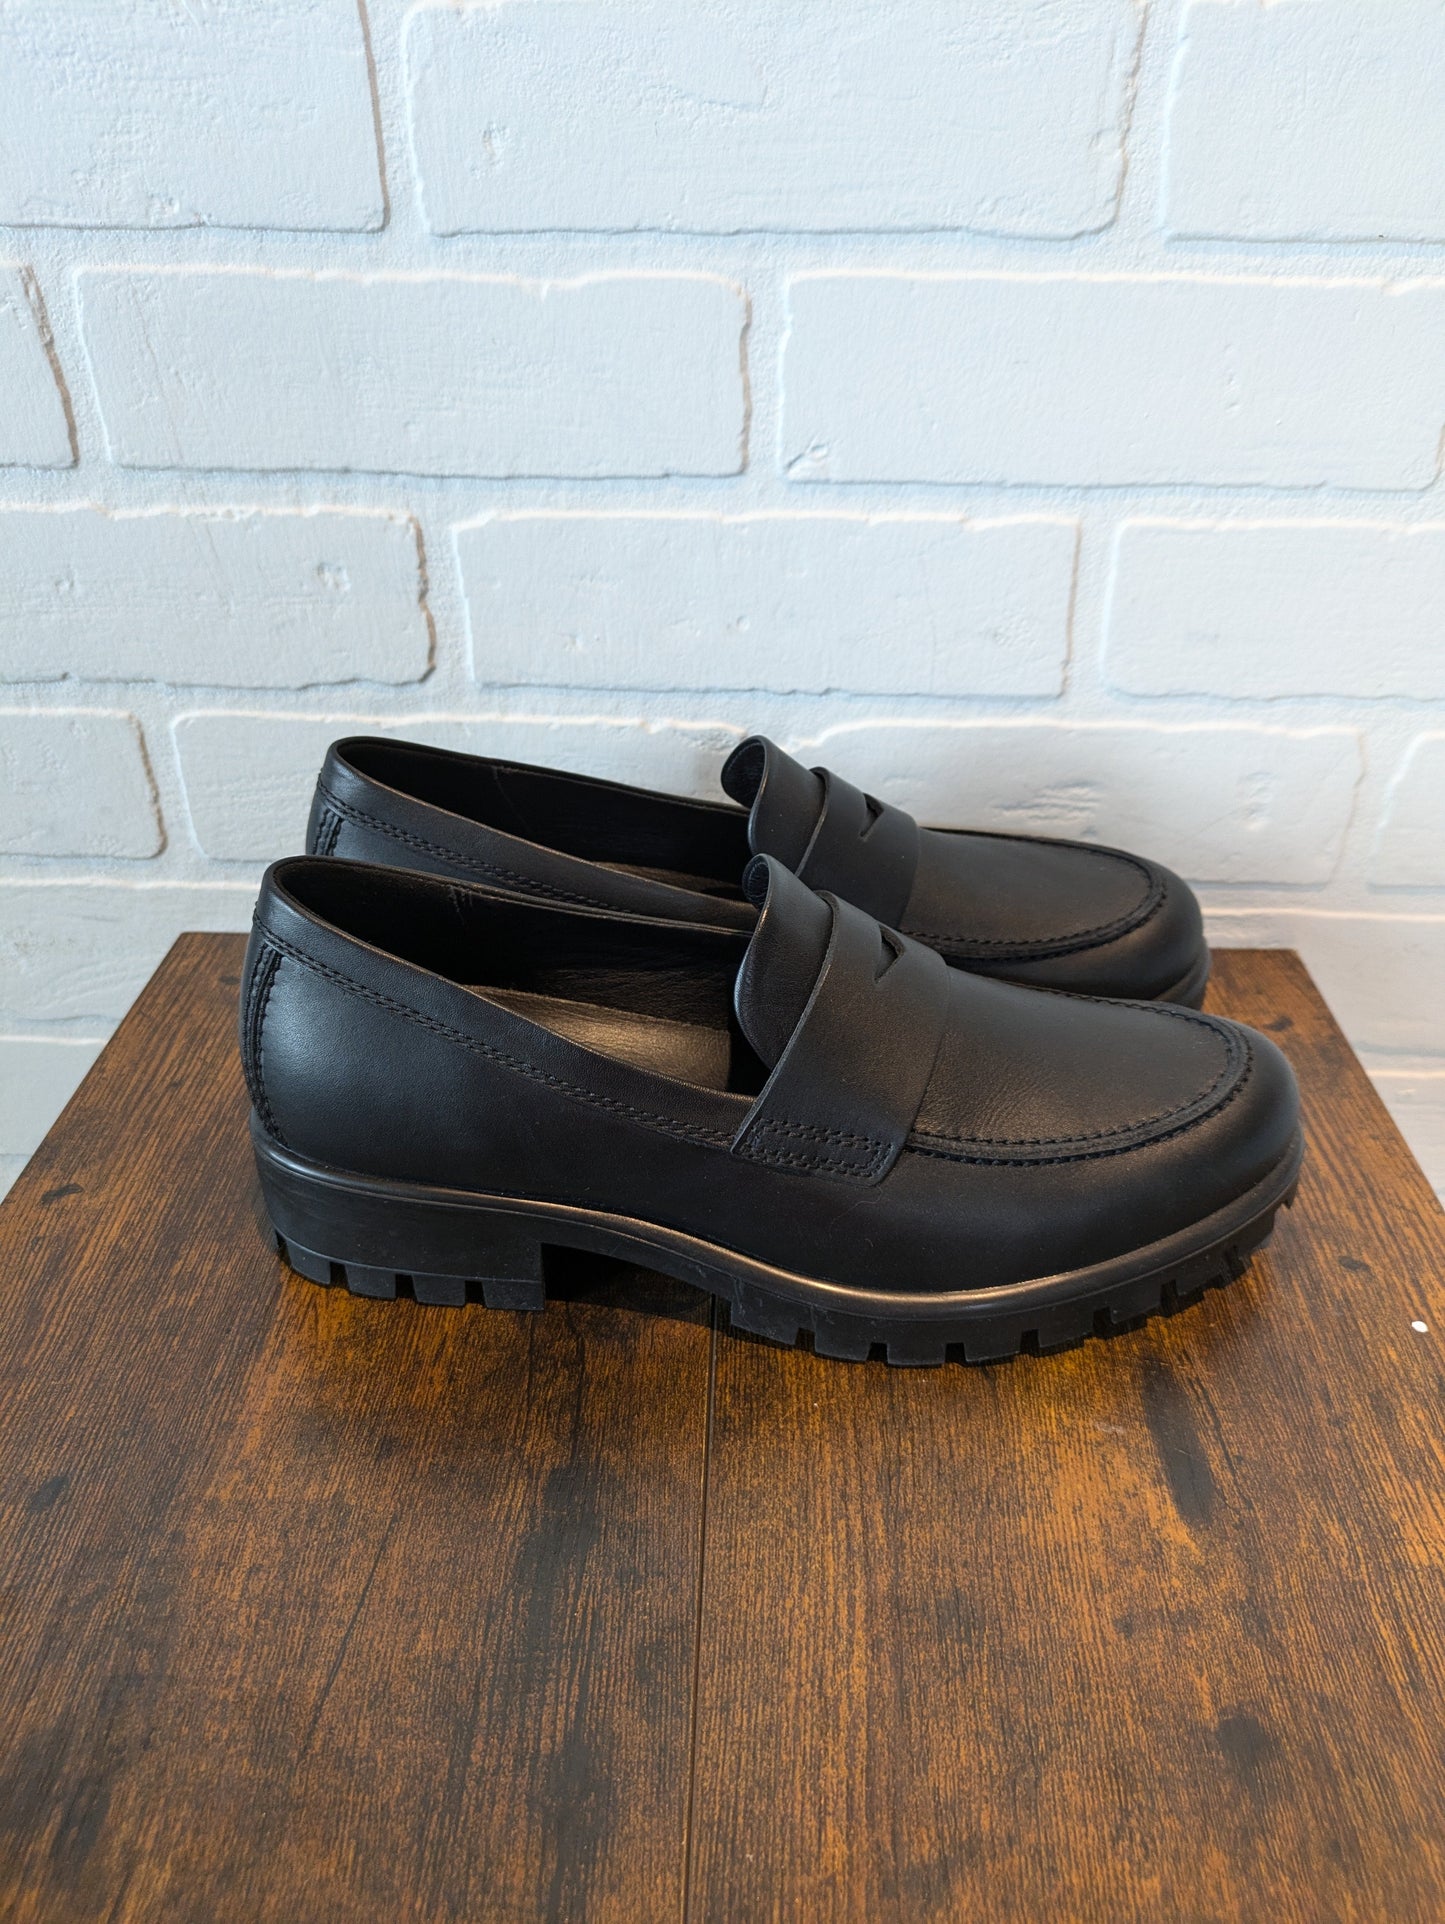 Black Shoes Flats Ecco, Size 8